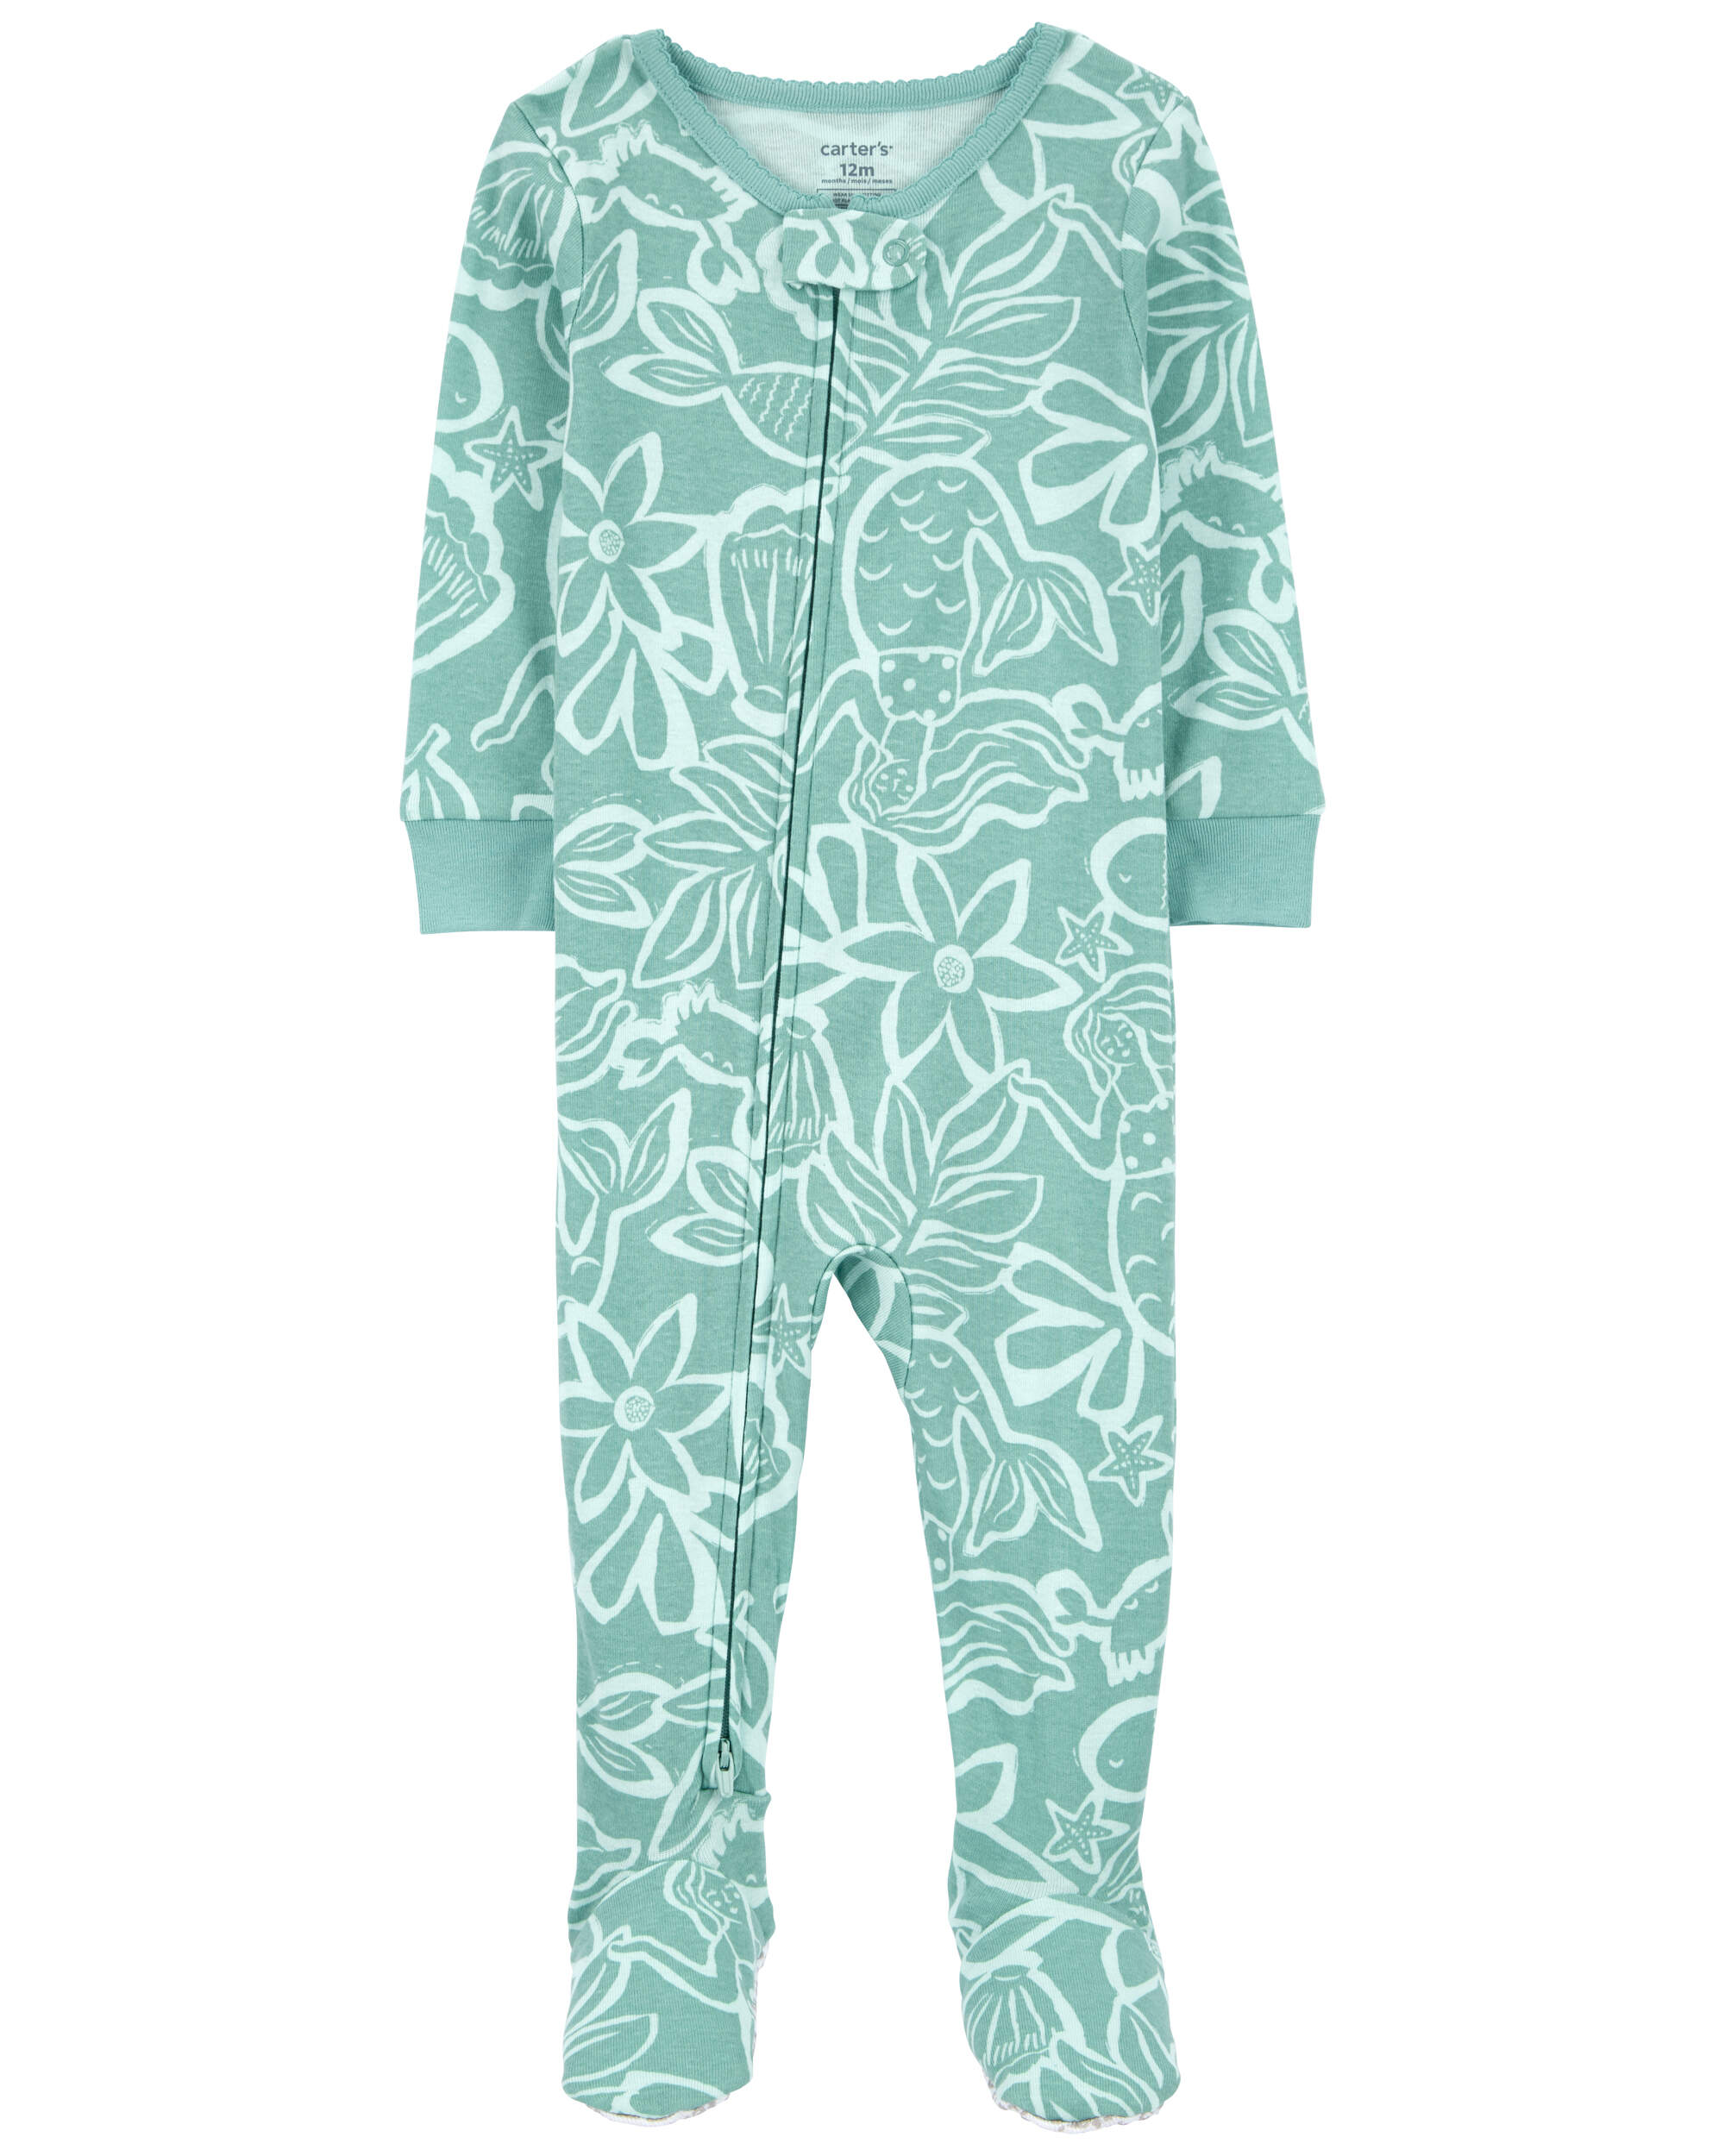  CHILDRENSTAR Pajamas for Little Girls Mermaid Pjs Sets Kids  Raglan Sleeve Fall Winter Sleepwear,4t 5t: Clothing, Shoes & Jewelry